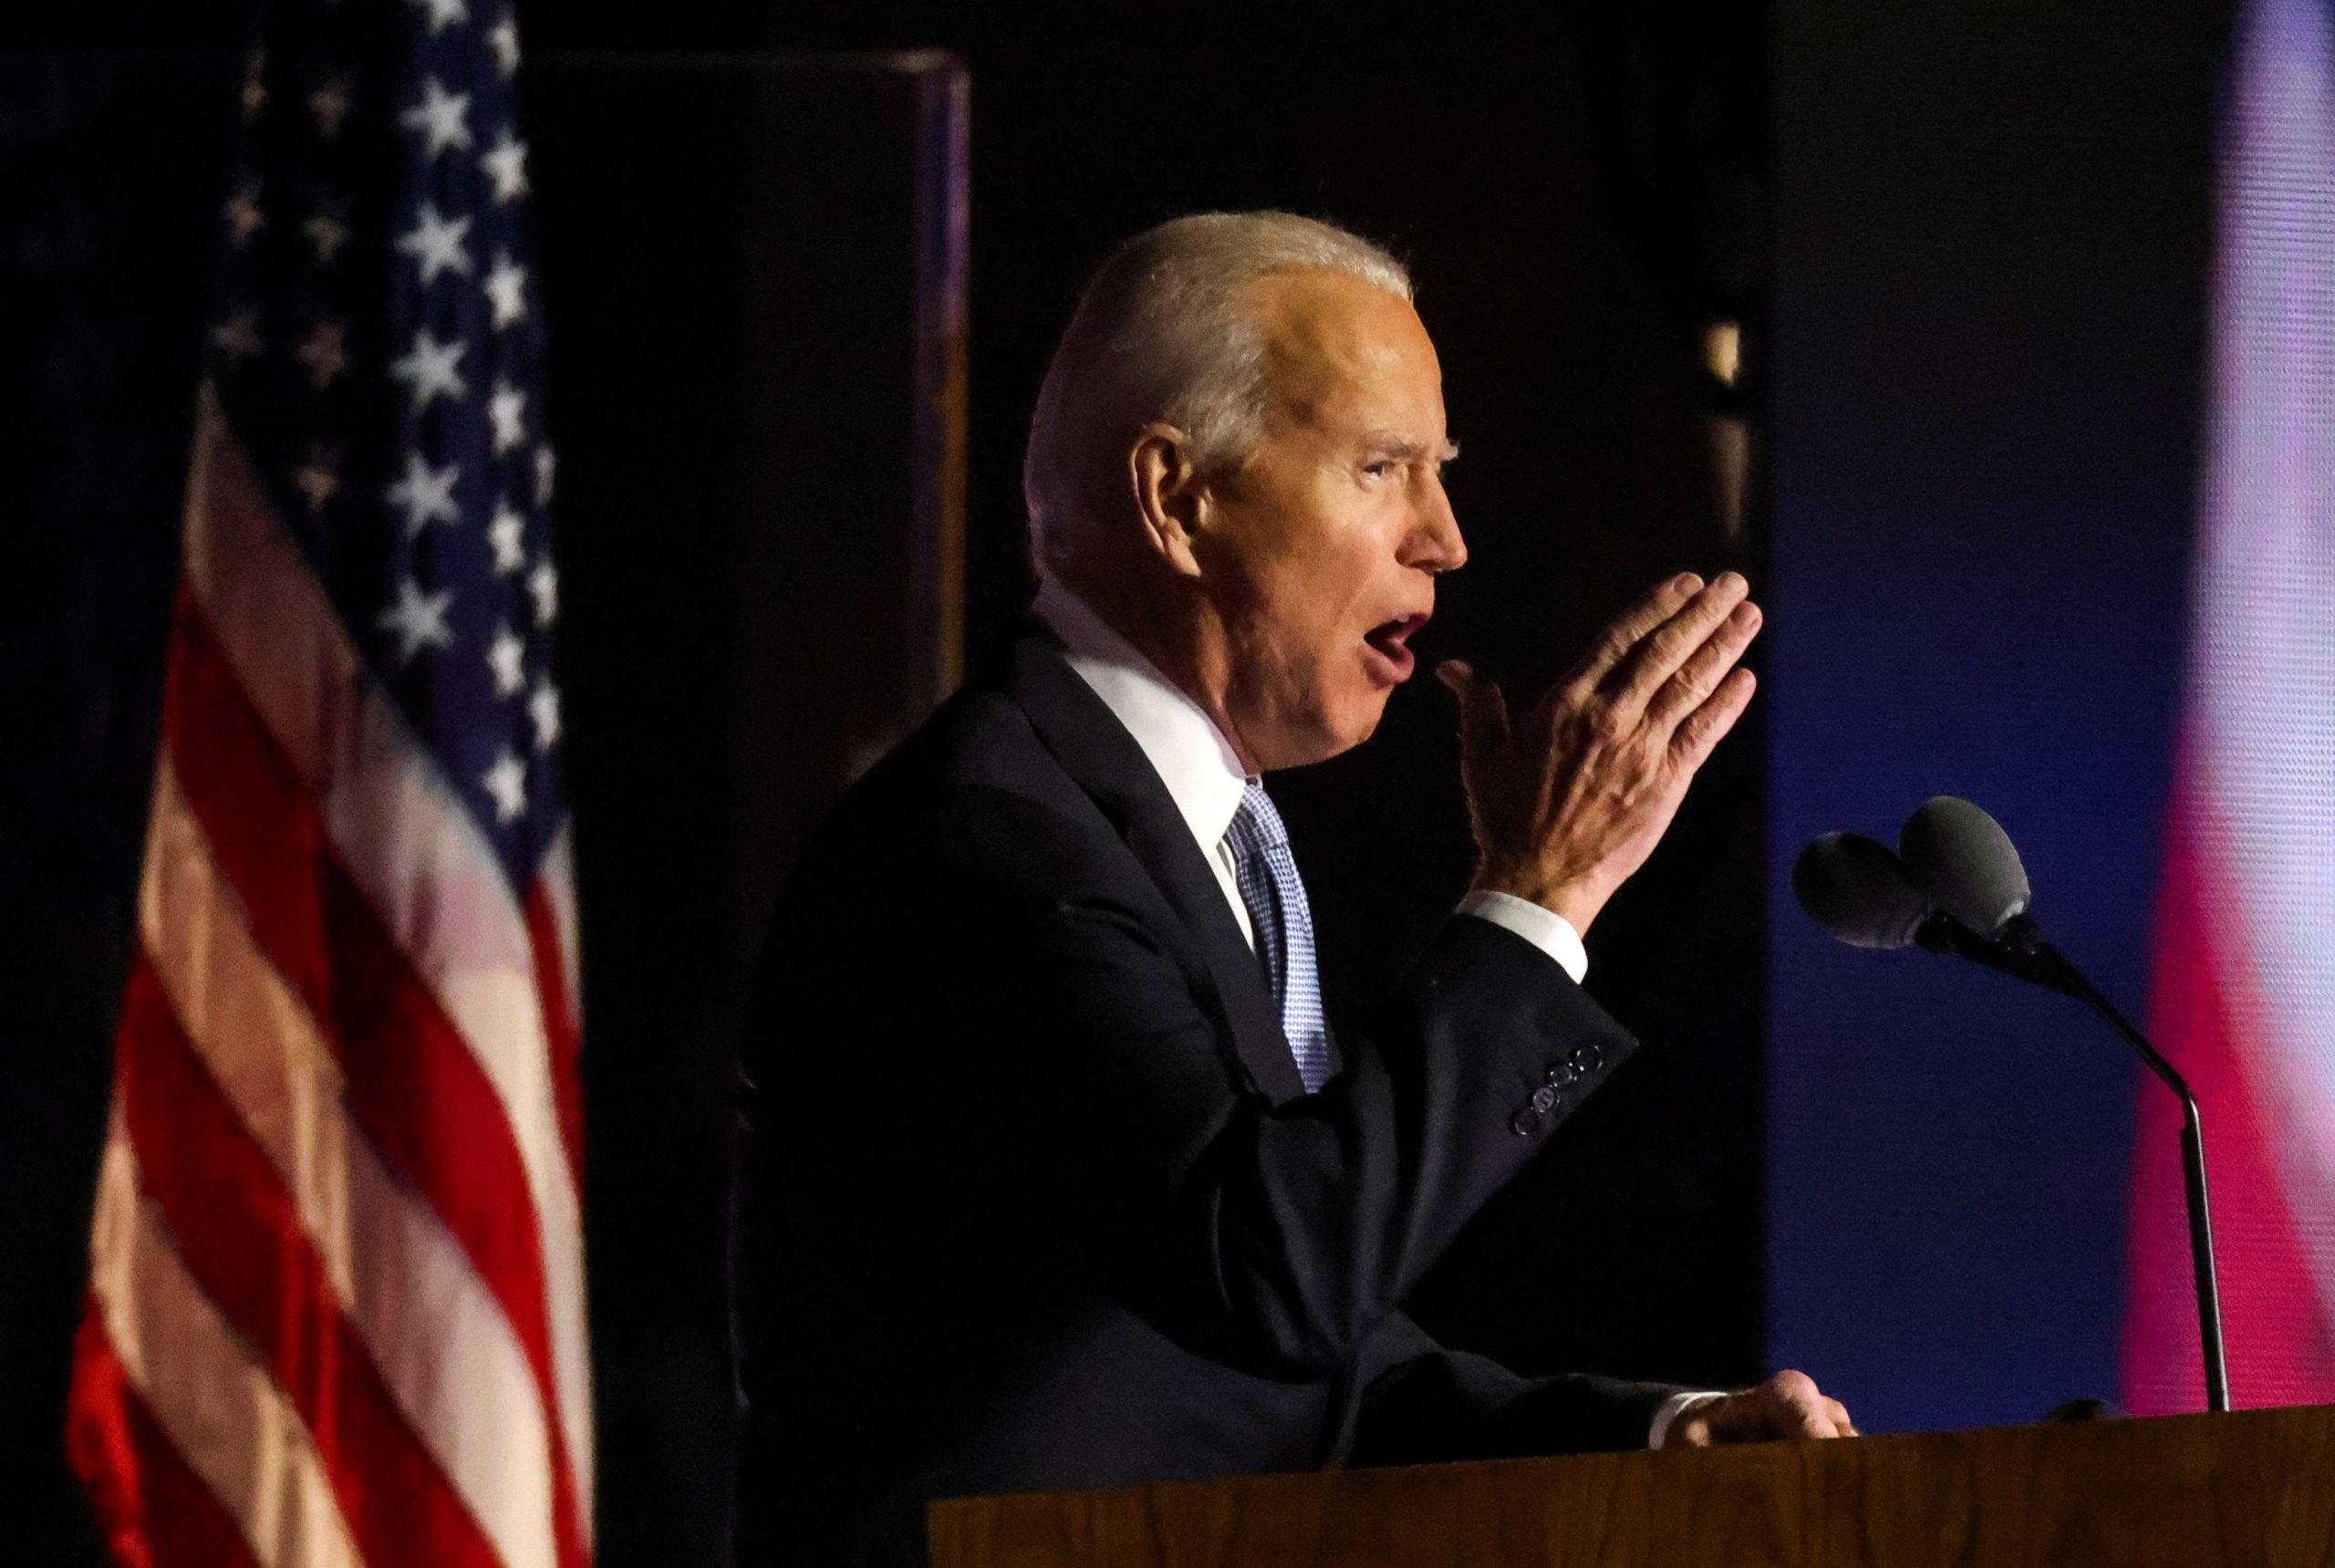 Joe Biden’s local weather change plans face unsure future within the Senate